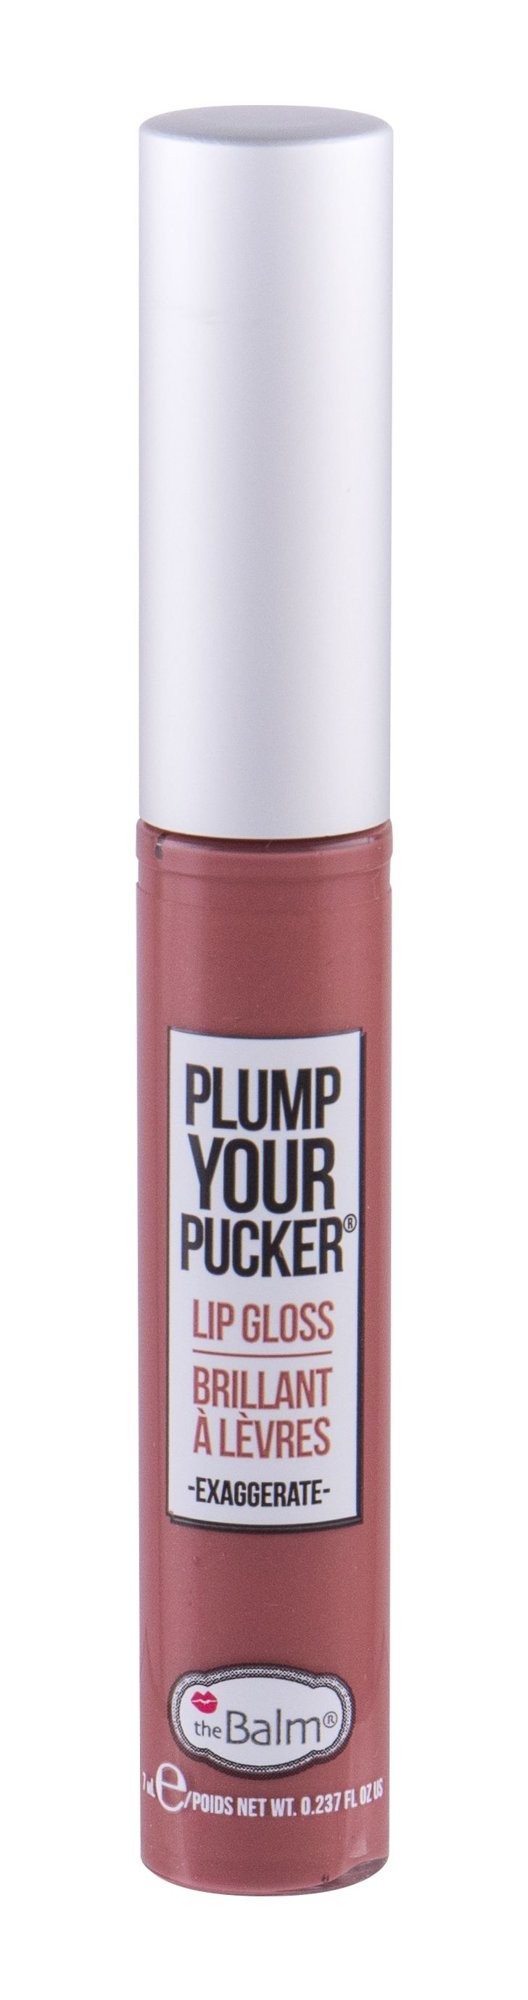 TheBalm Plump Your Pucker lūpų blizgesys